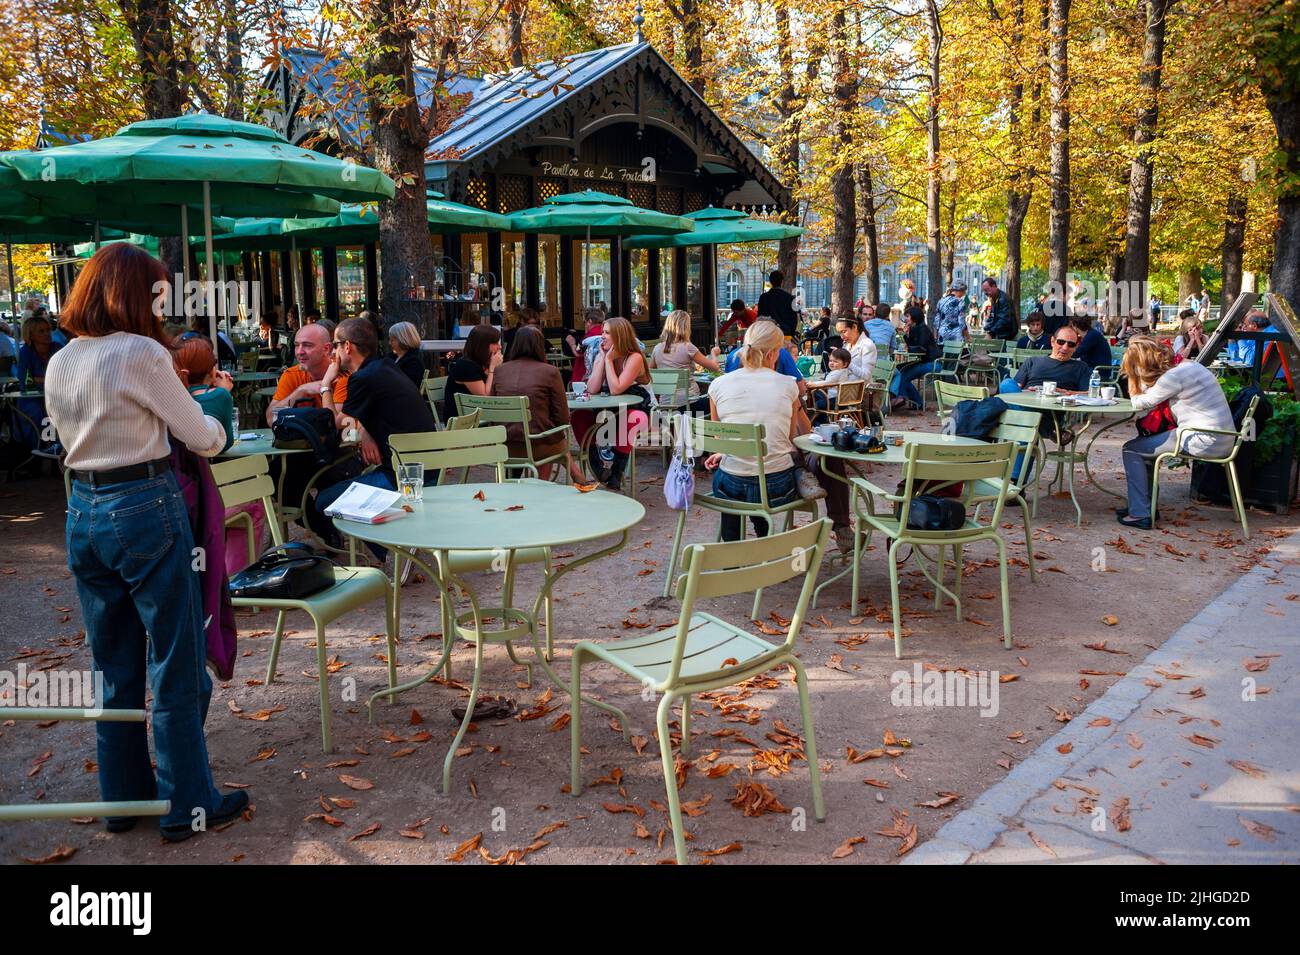 Paris, France, Crowd People, Sitting at Tables, French Cafe Terrace in Public Park, in Autumn, 'Pavillion de la Fontaine' Luxembourg Gardens Stock Photo